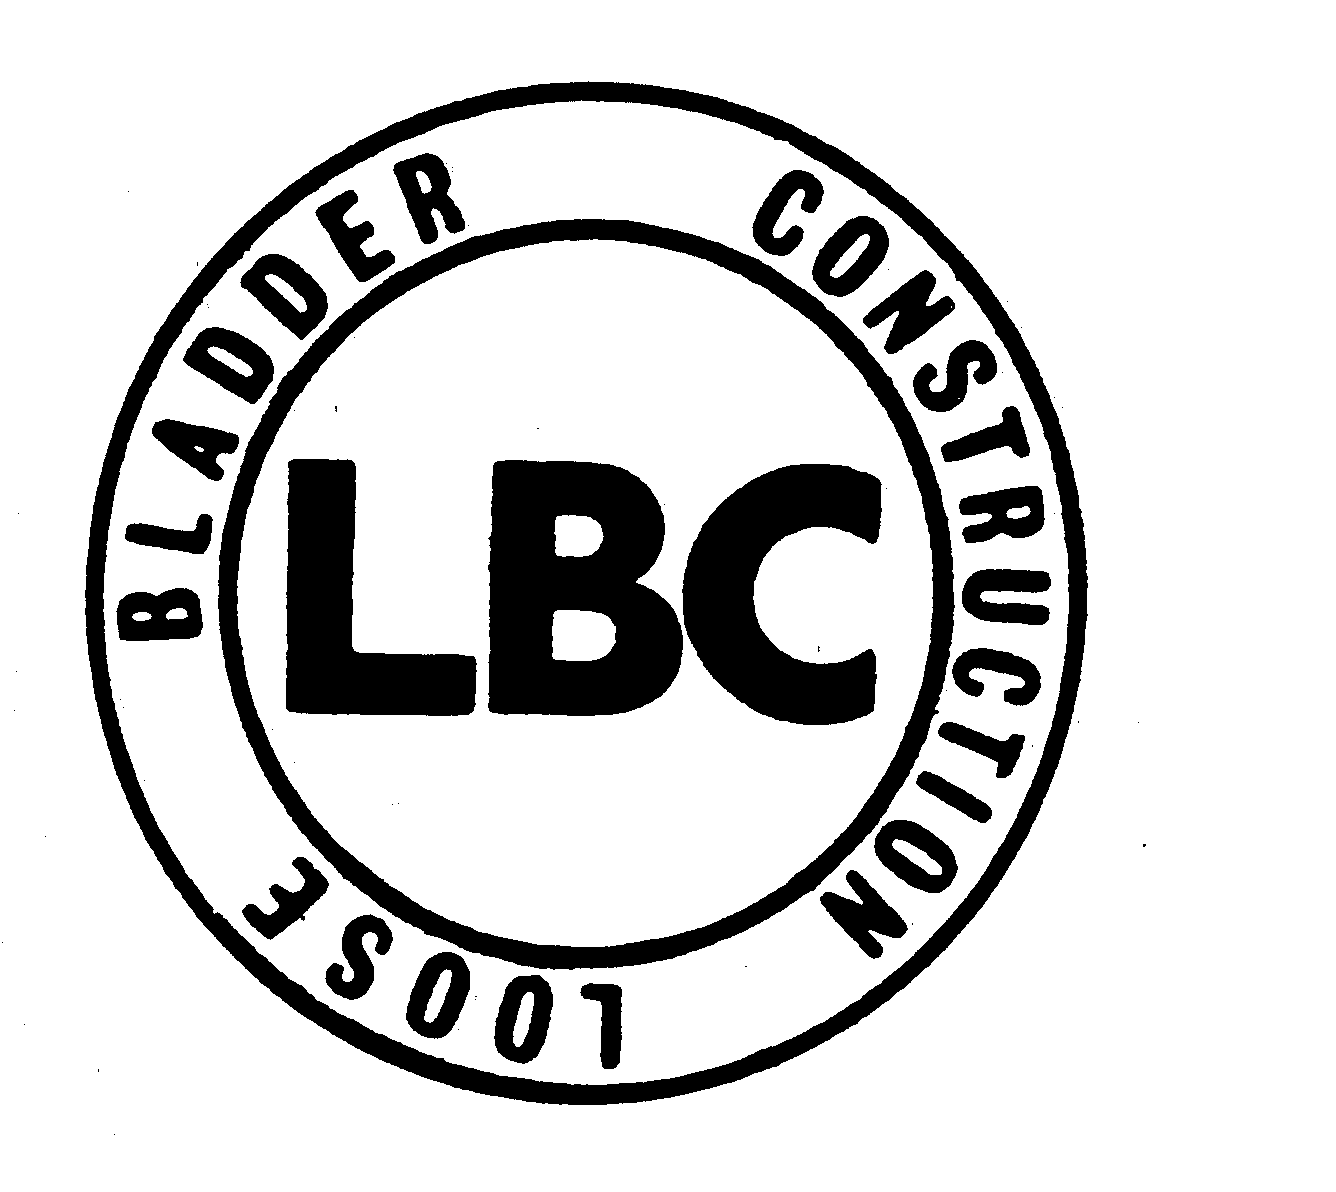  LOOSE BLADDER CONSTRUCTION LBC